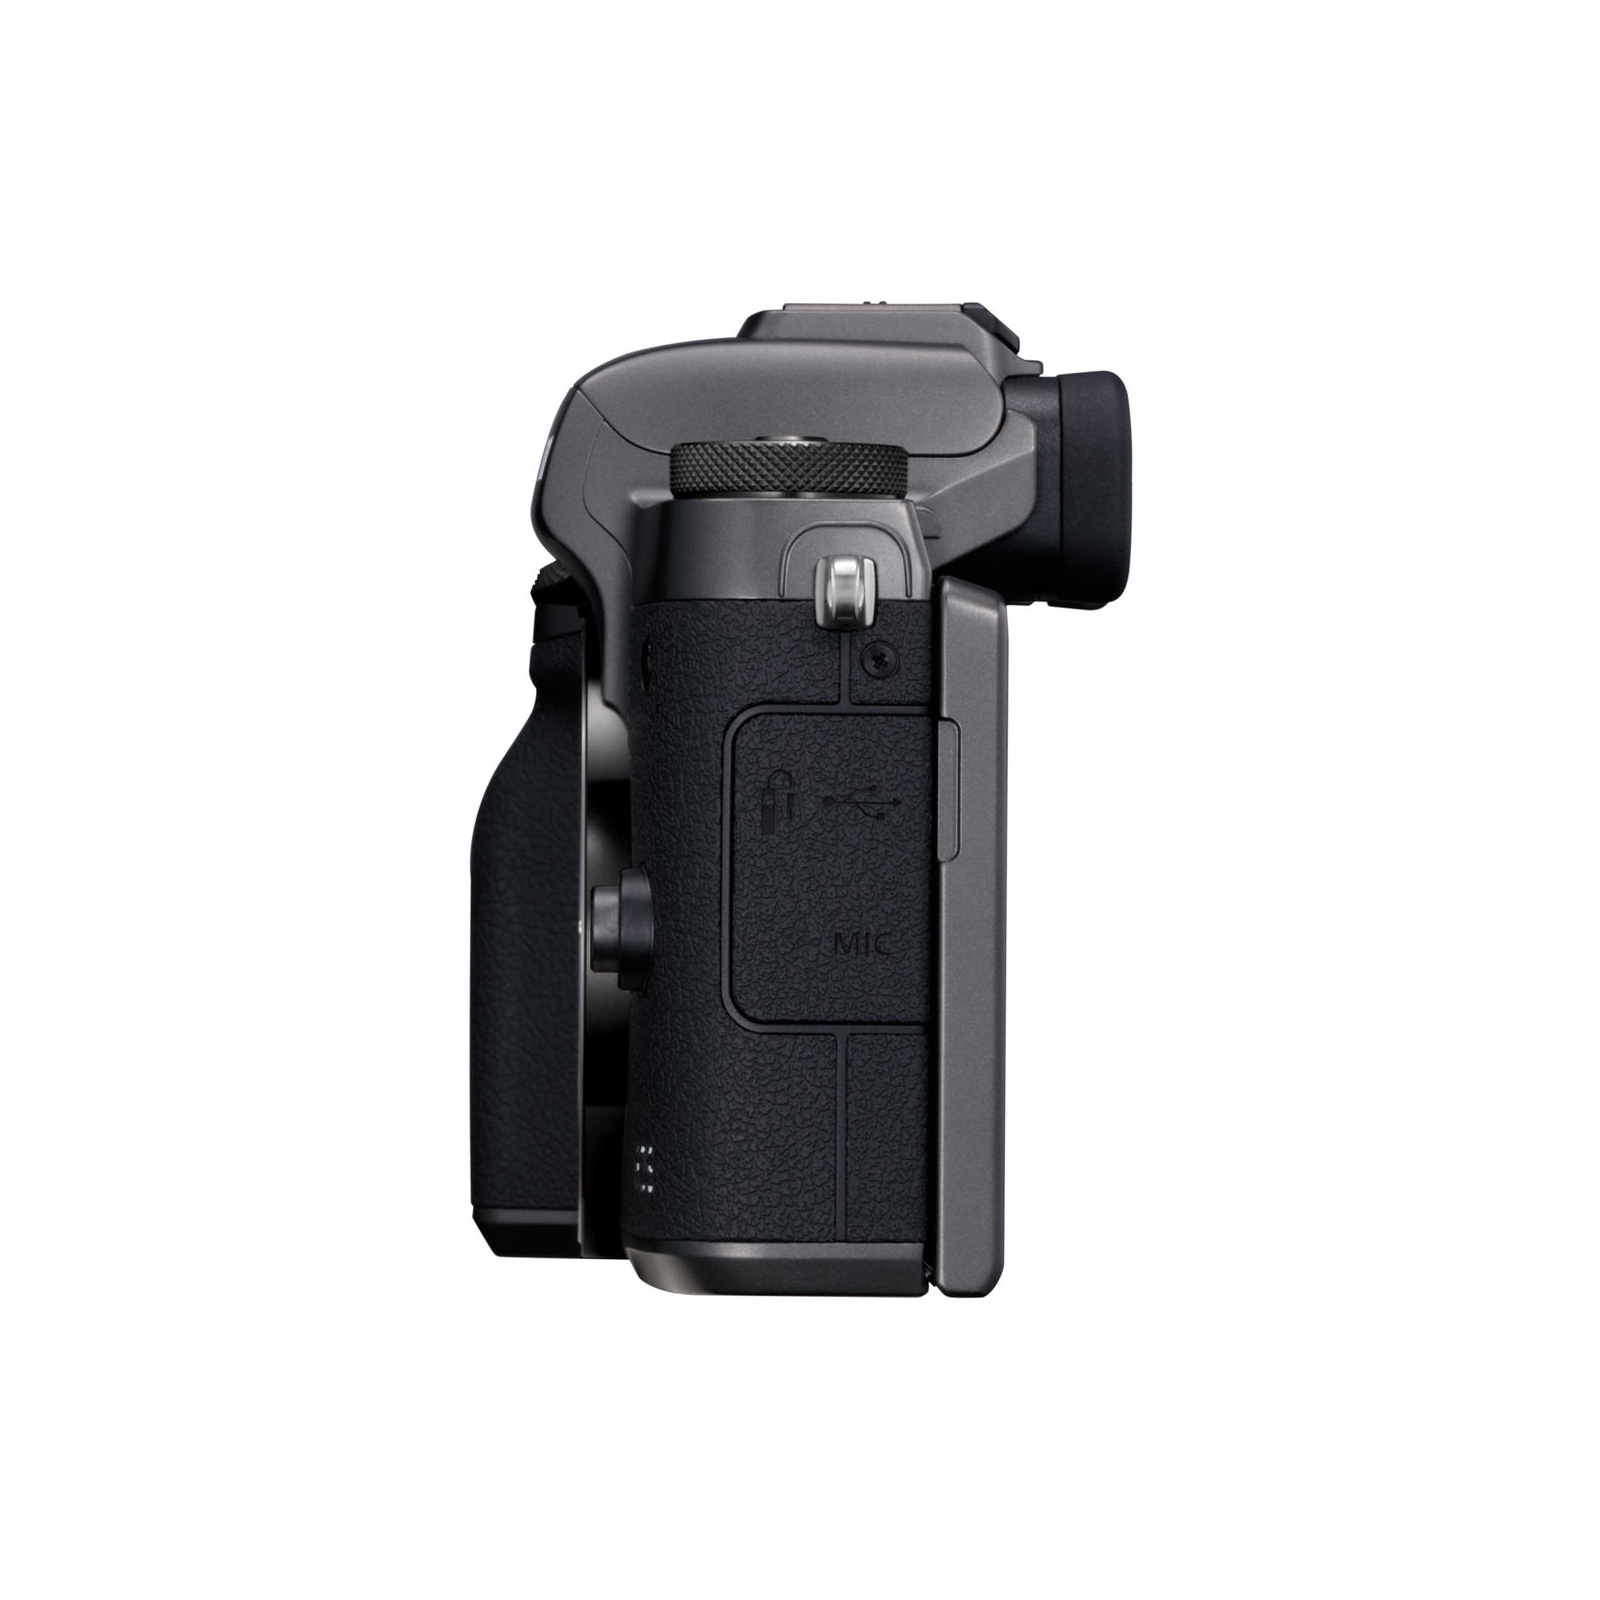 Цифровой фотоаппарат Canon EOS M5 Body Black (1279C043) изображение 8